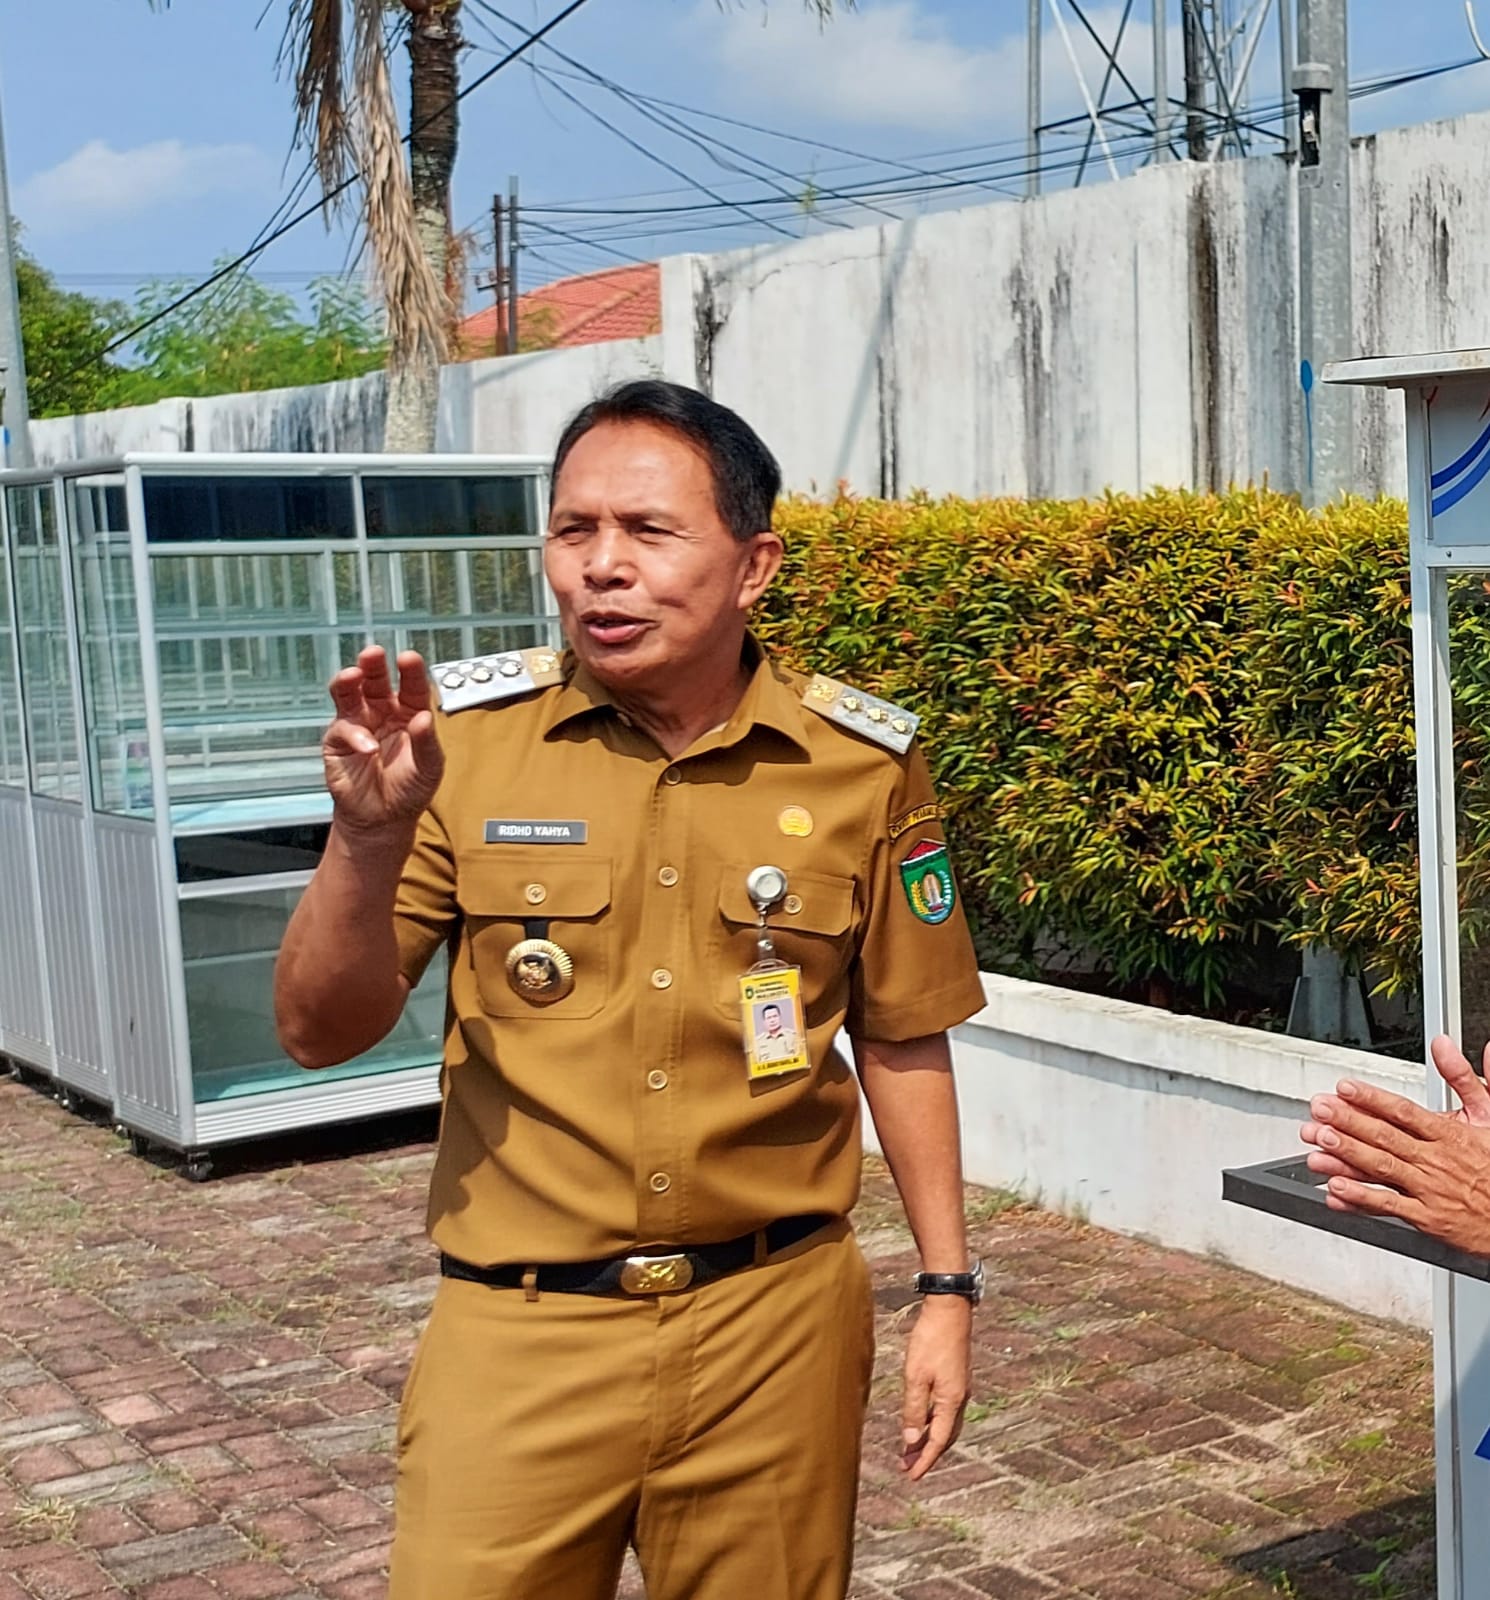 Pekerja Asing Banyak Masuk Indonesia, Walikota Prabumulih Ajak “Serang Balik”